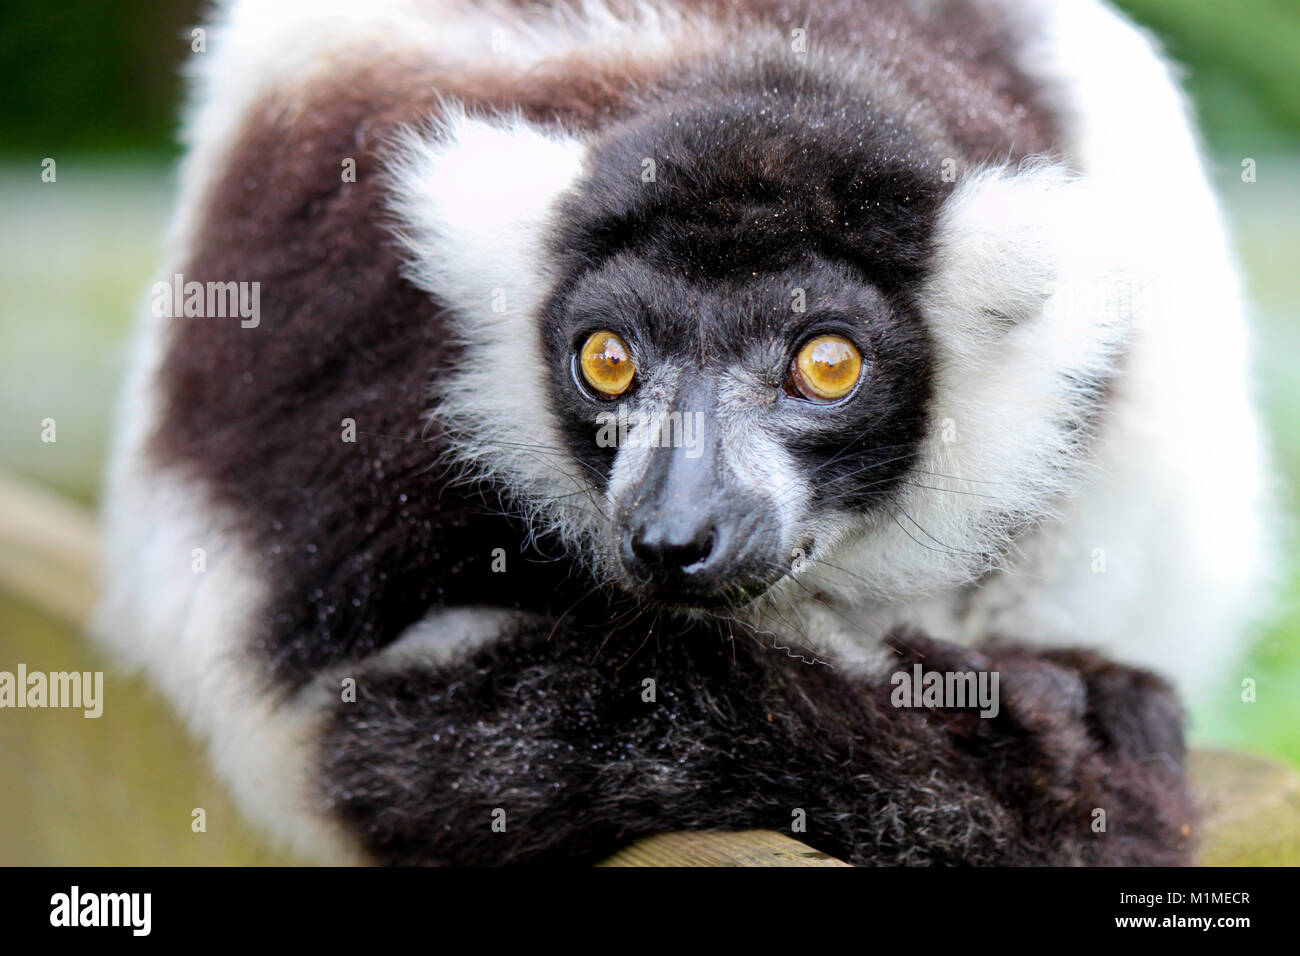 Fluffy monkey with big eyes Stock Photo - Alamy